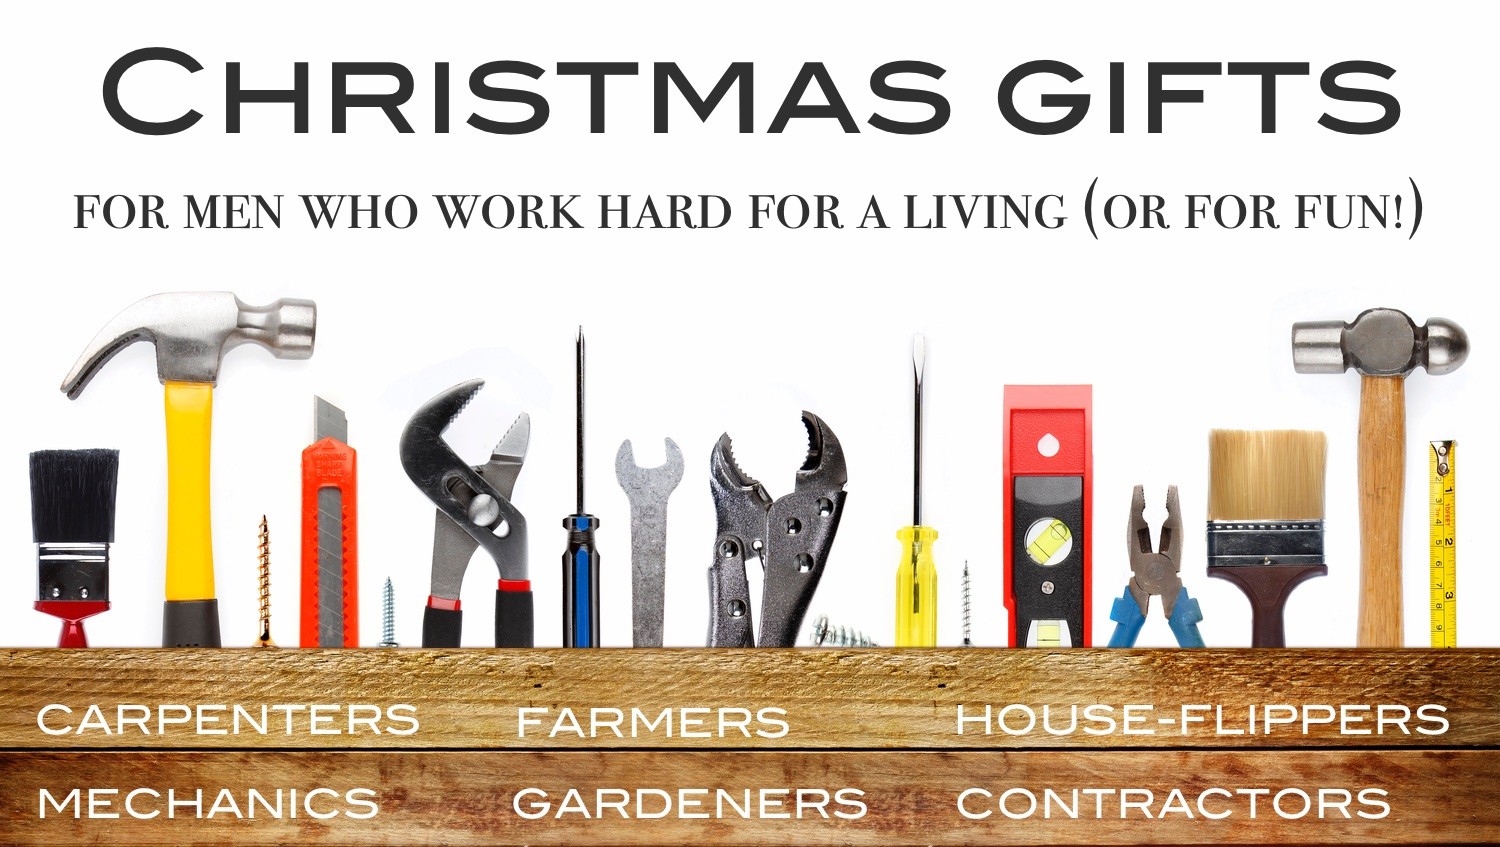 https://www.metropolitanmama.net/wp-content/uploads/2019/11/Christmas-Gift-Ideas-Men-Who-Work-Hard.jpg